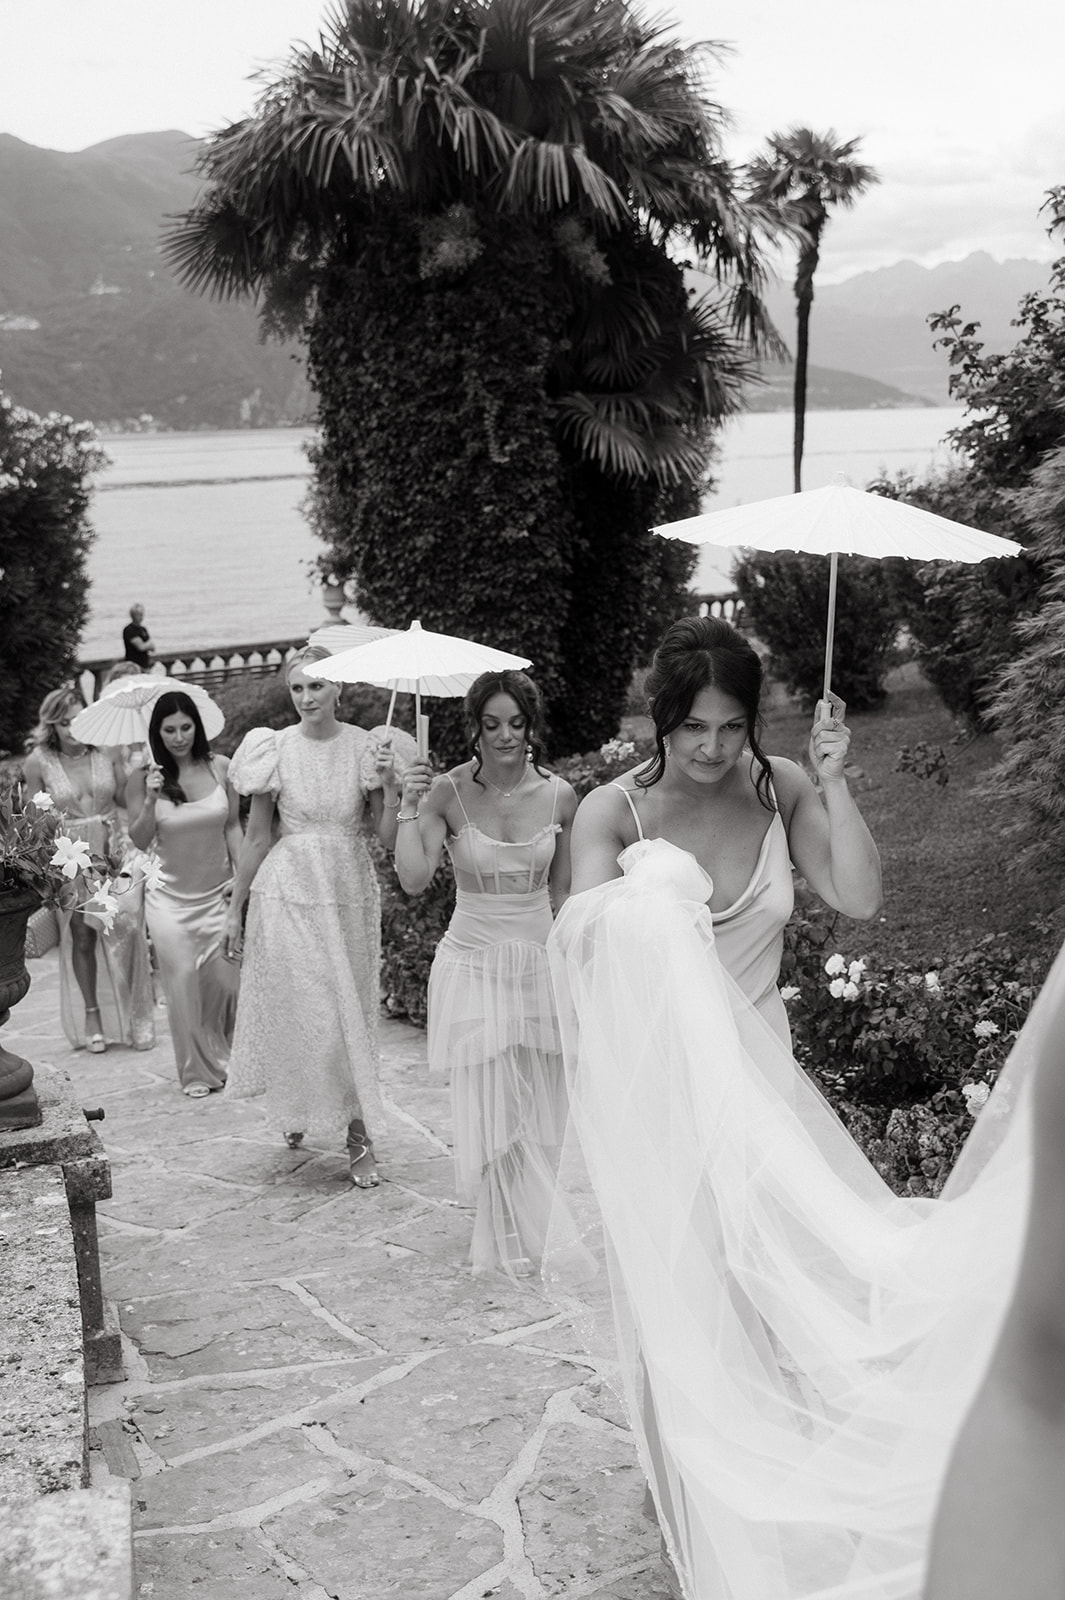 trendiest Bridal party photos with umbrellas 